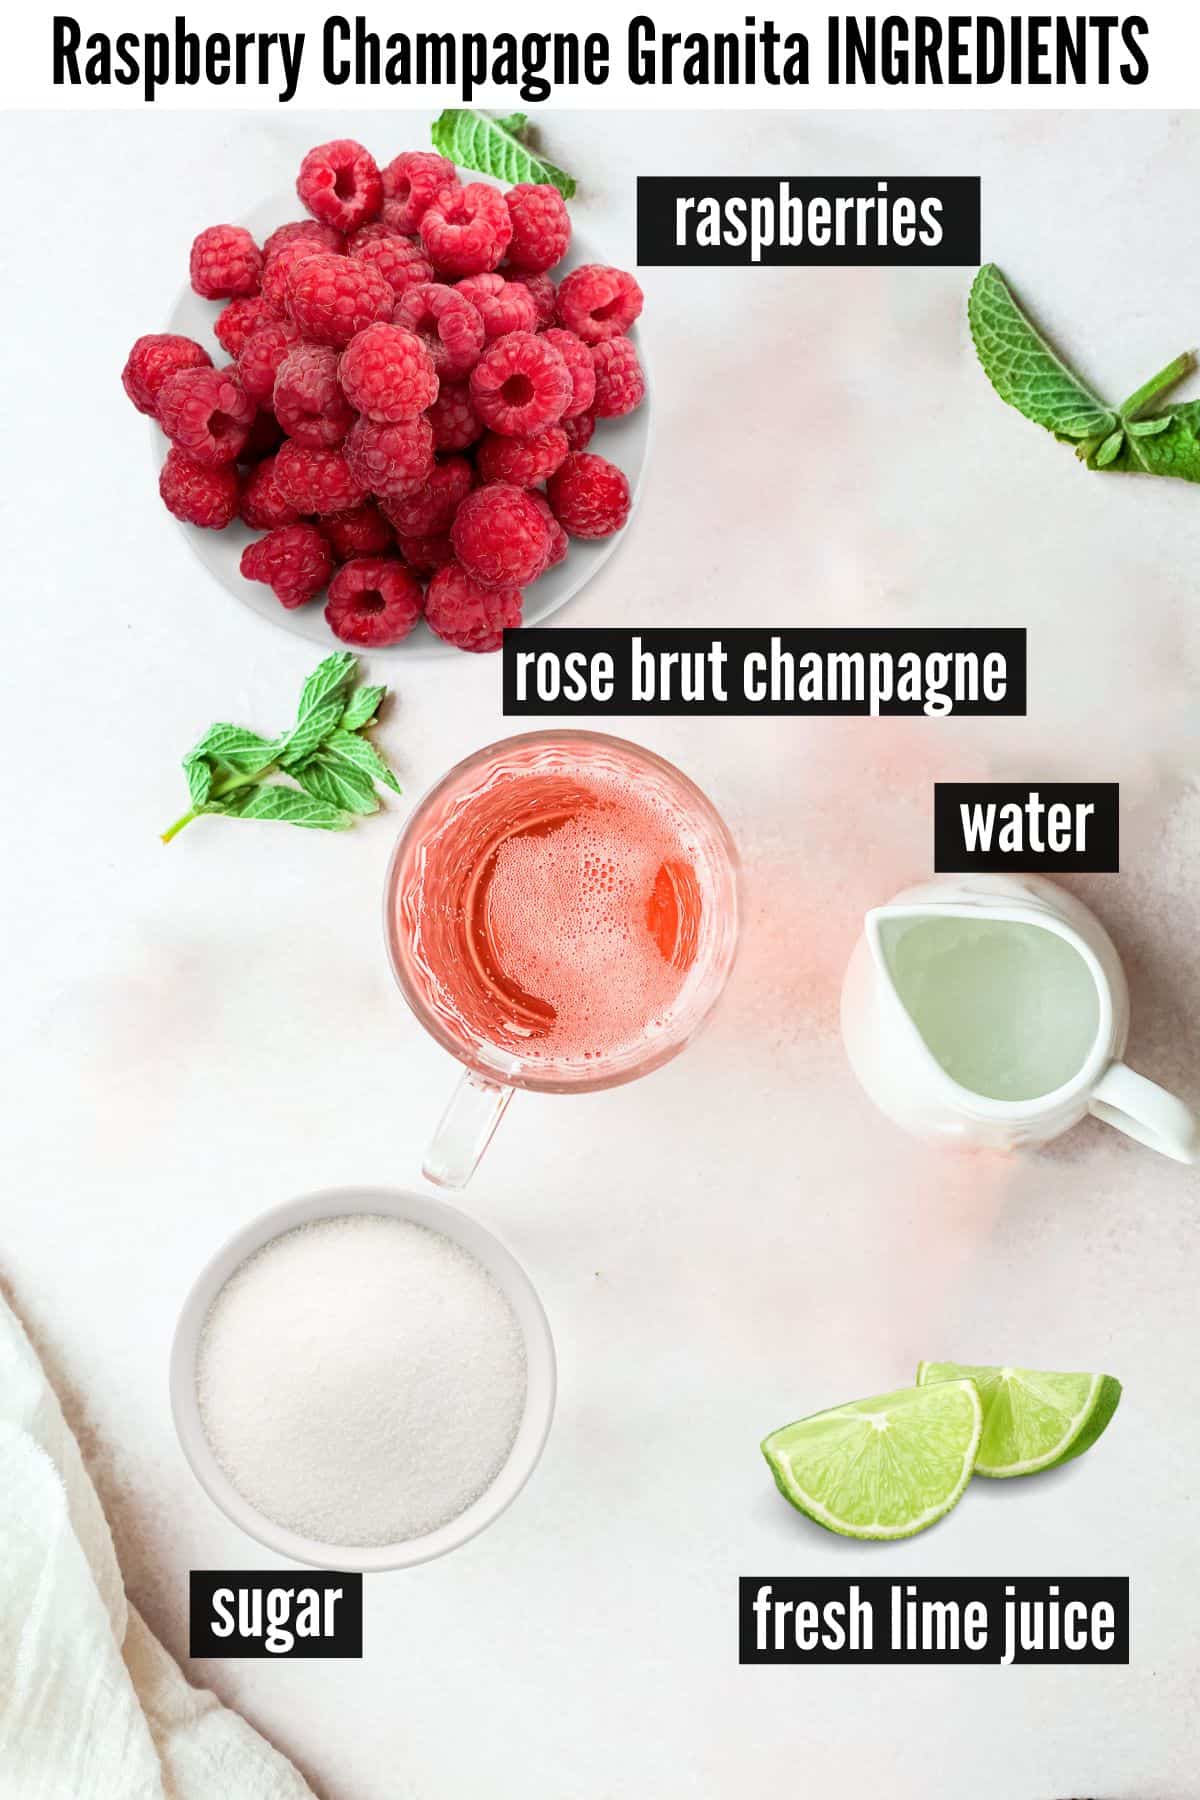 raspberry champagne granita labelled ingredients